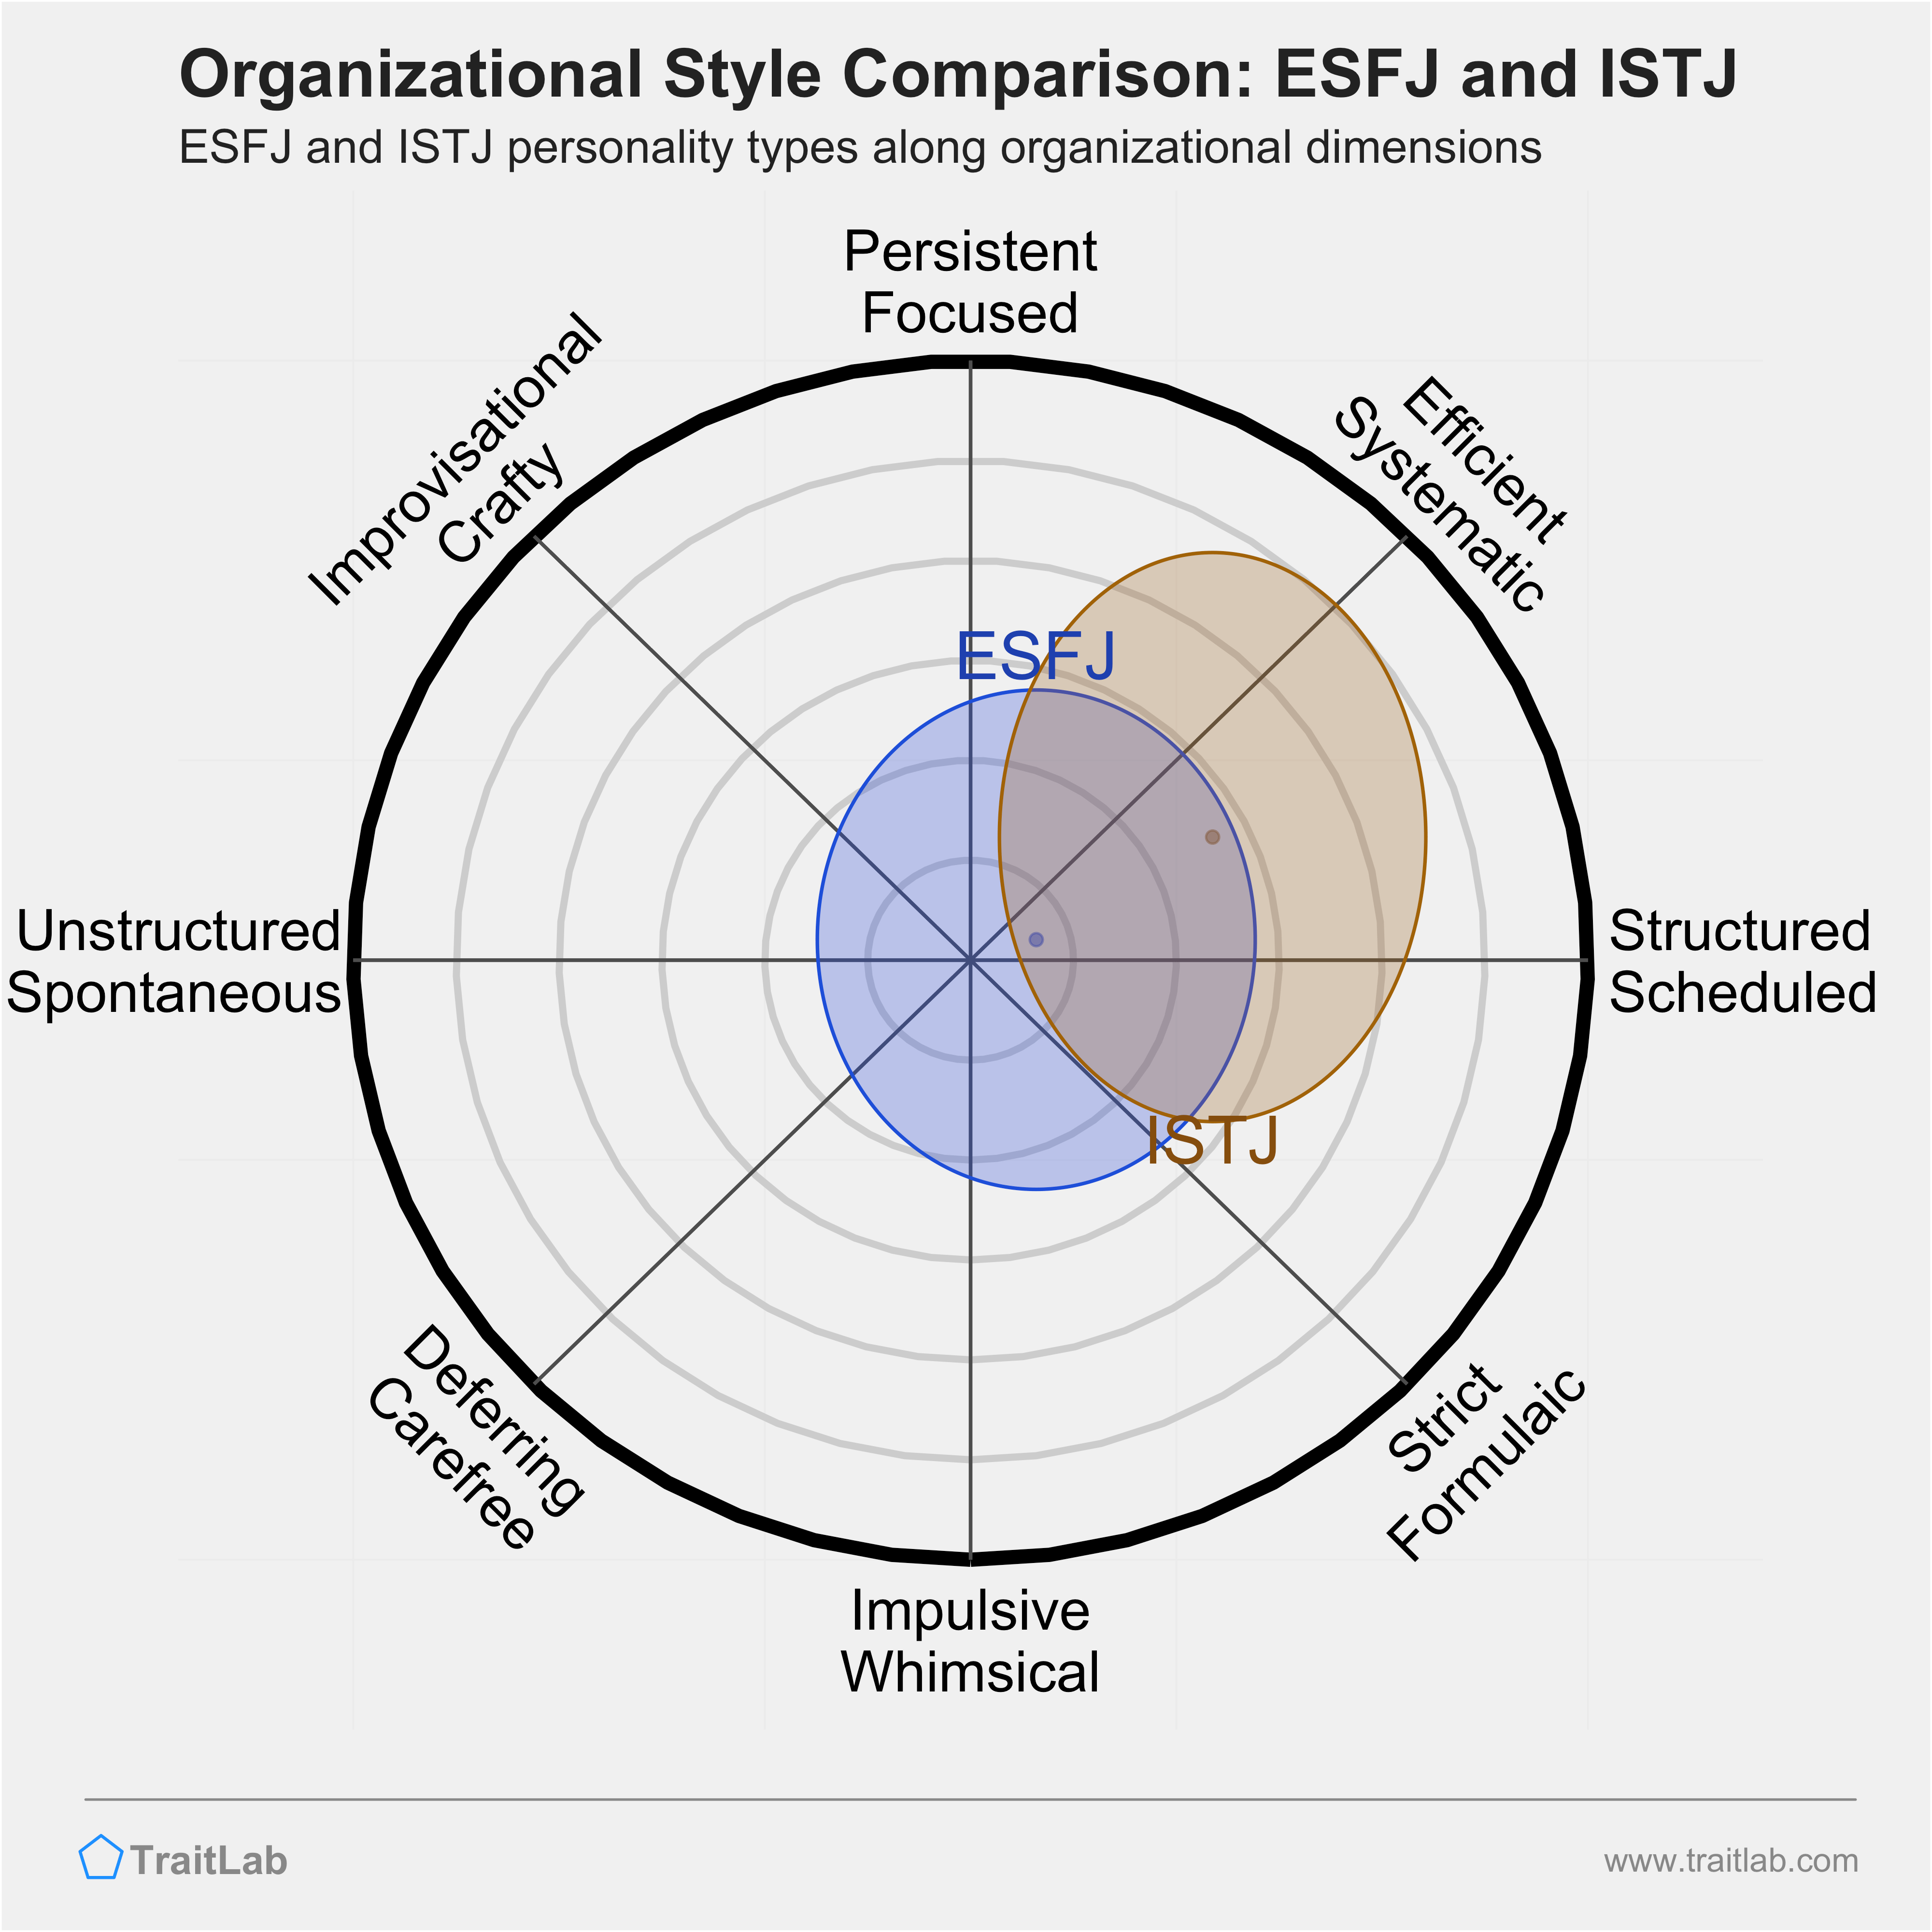 ESFJ and ISTJ comparison across organizational dimensions